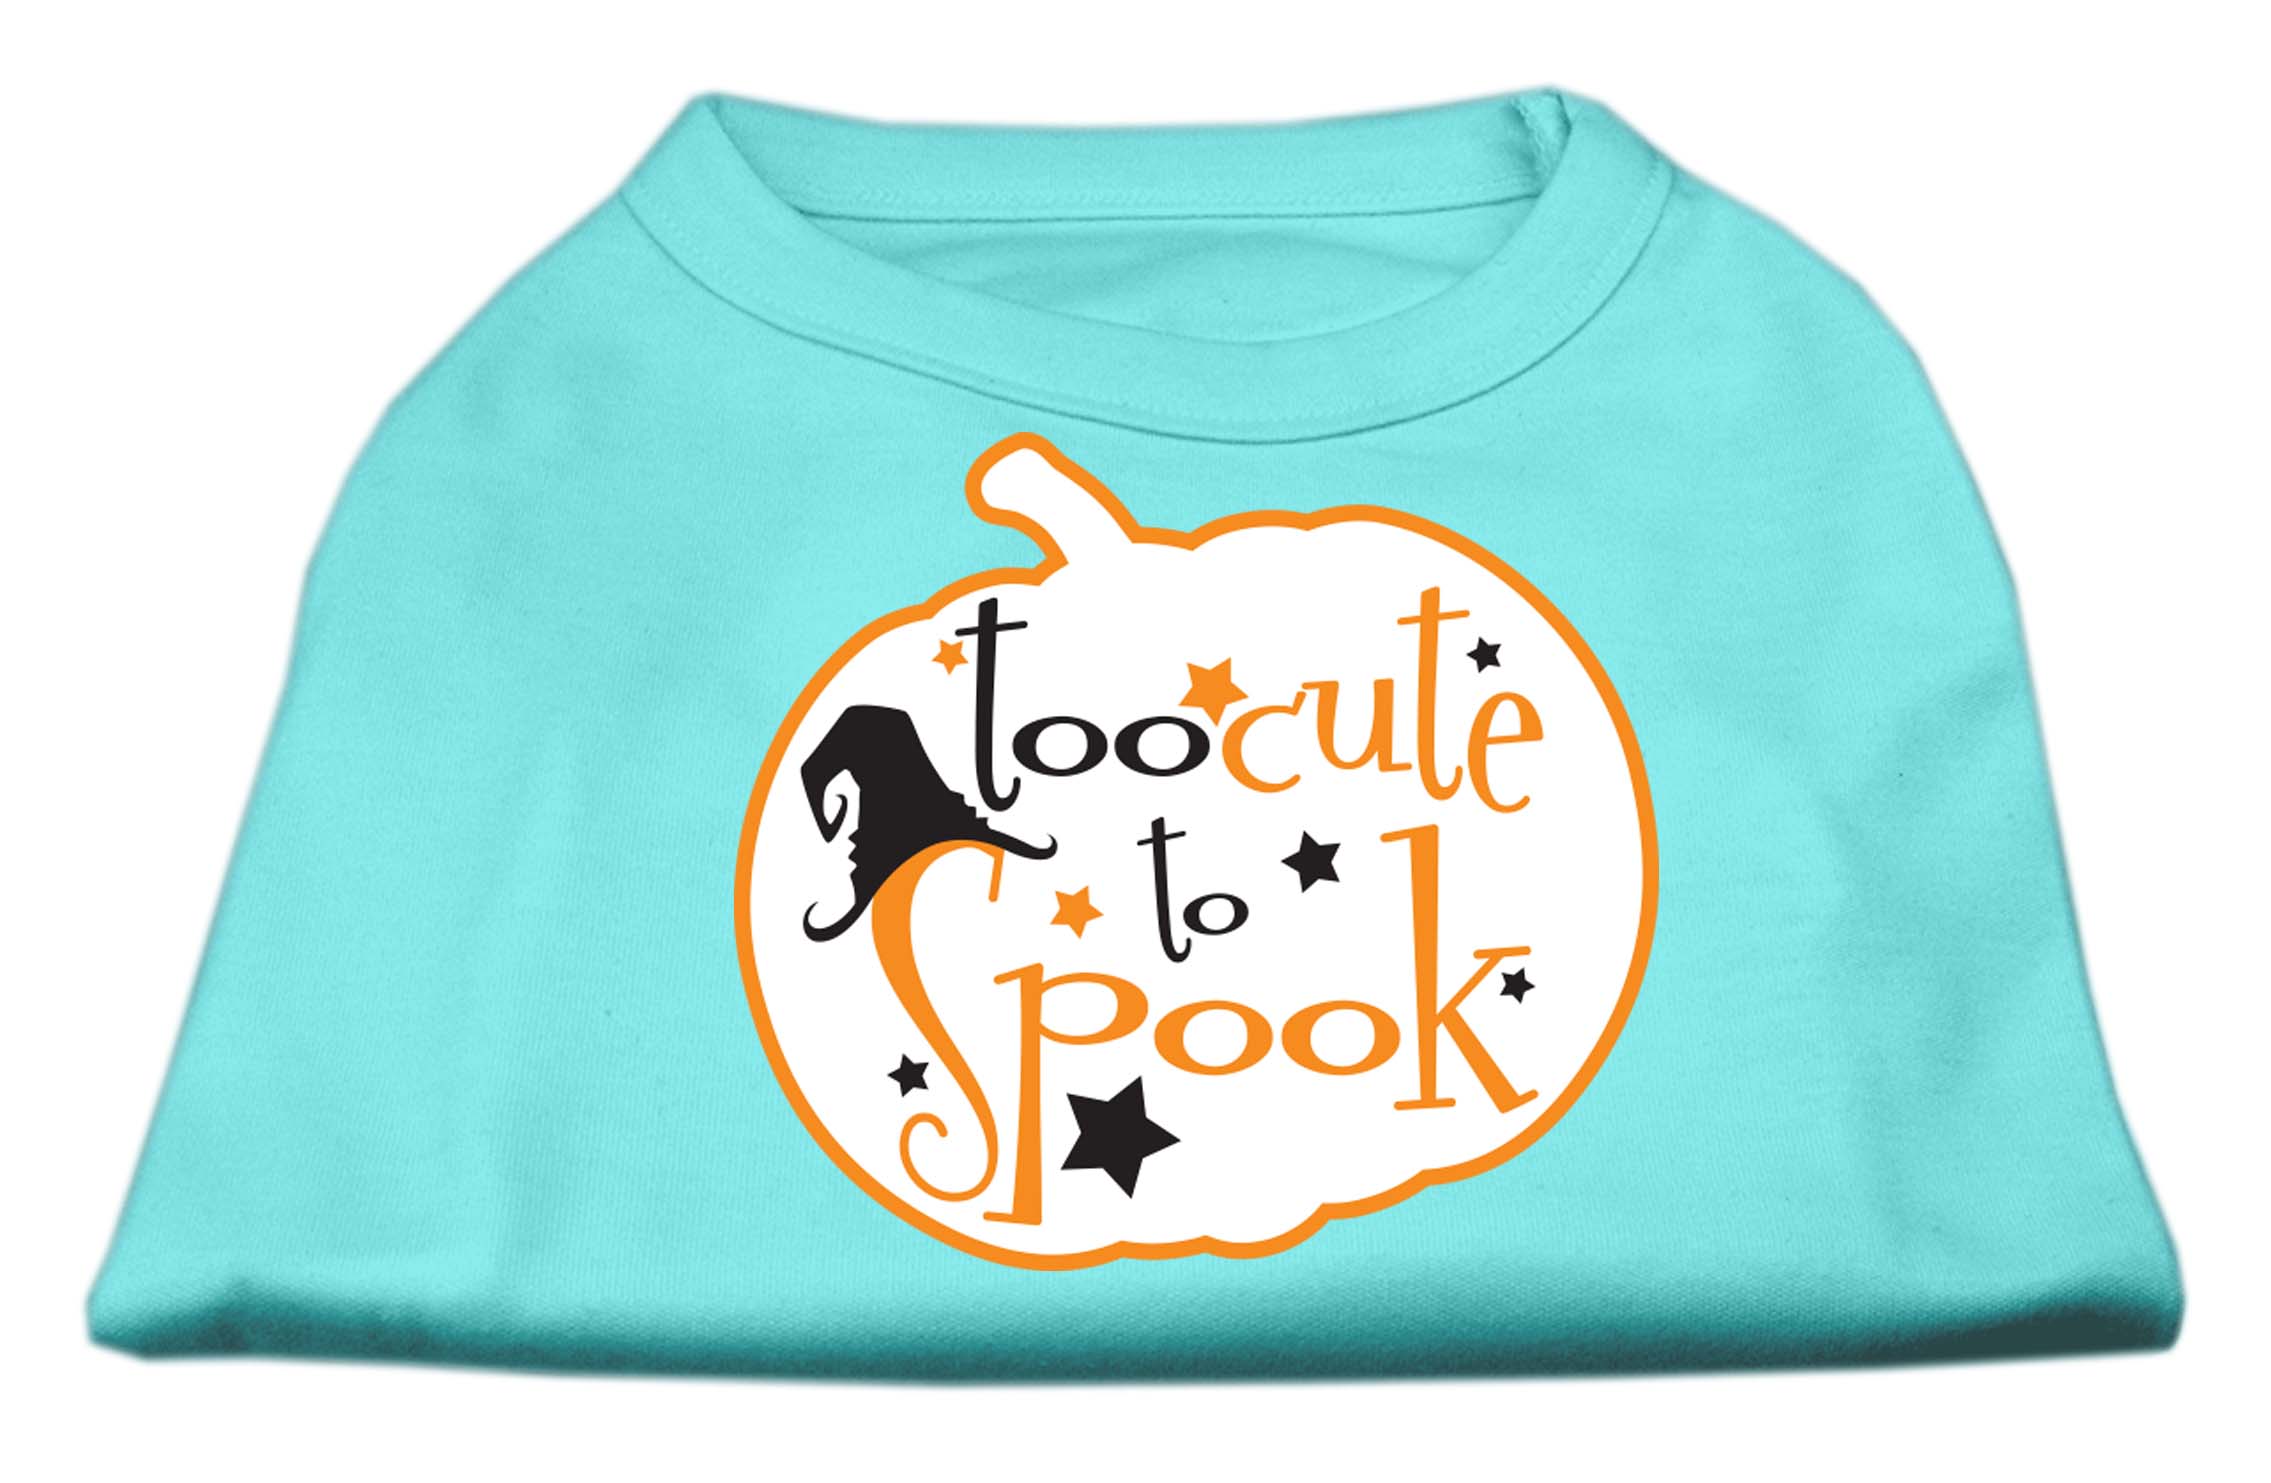 Too Cute to Spook Screen Print Dog Shirt Aqua Med